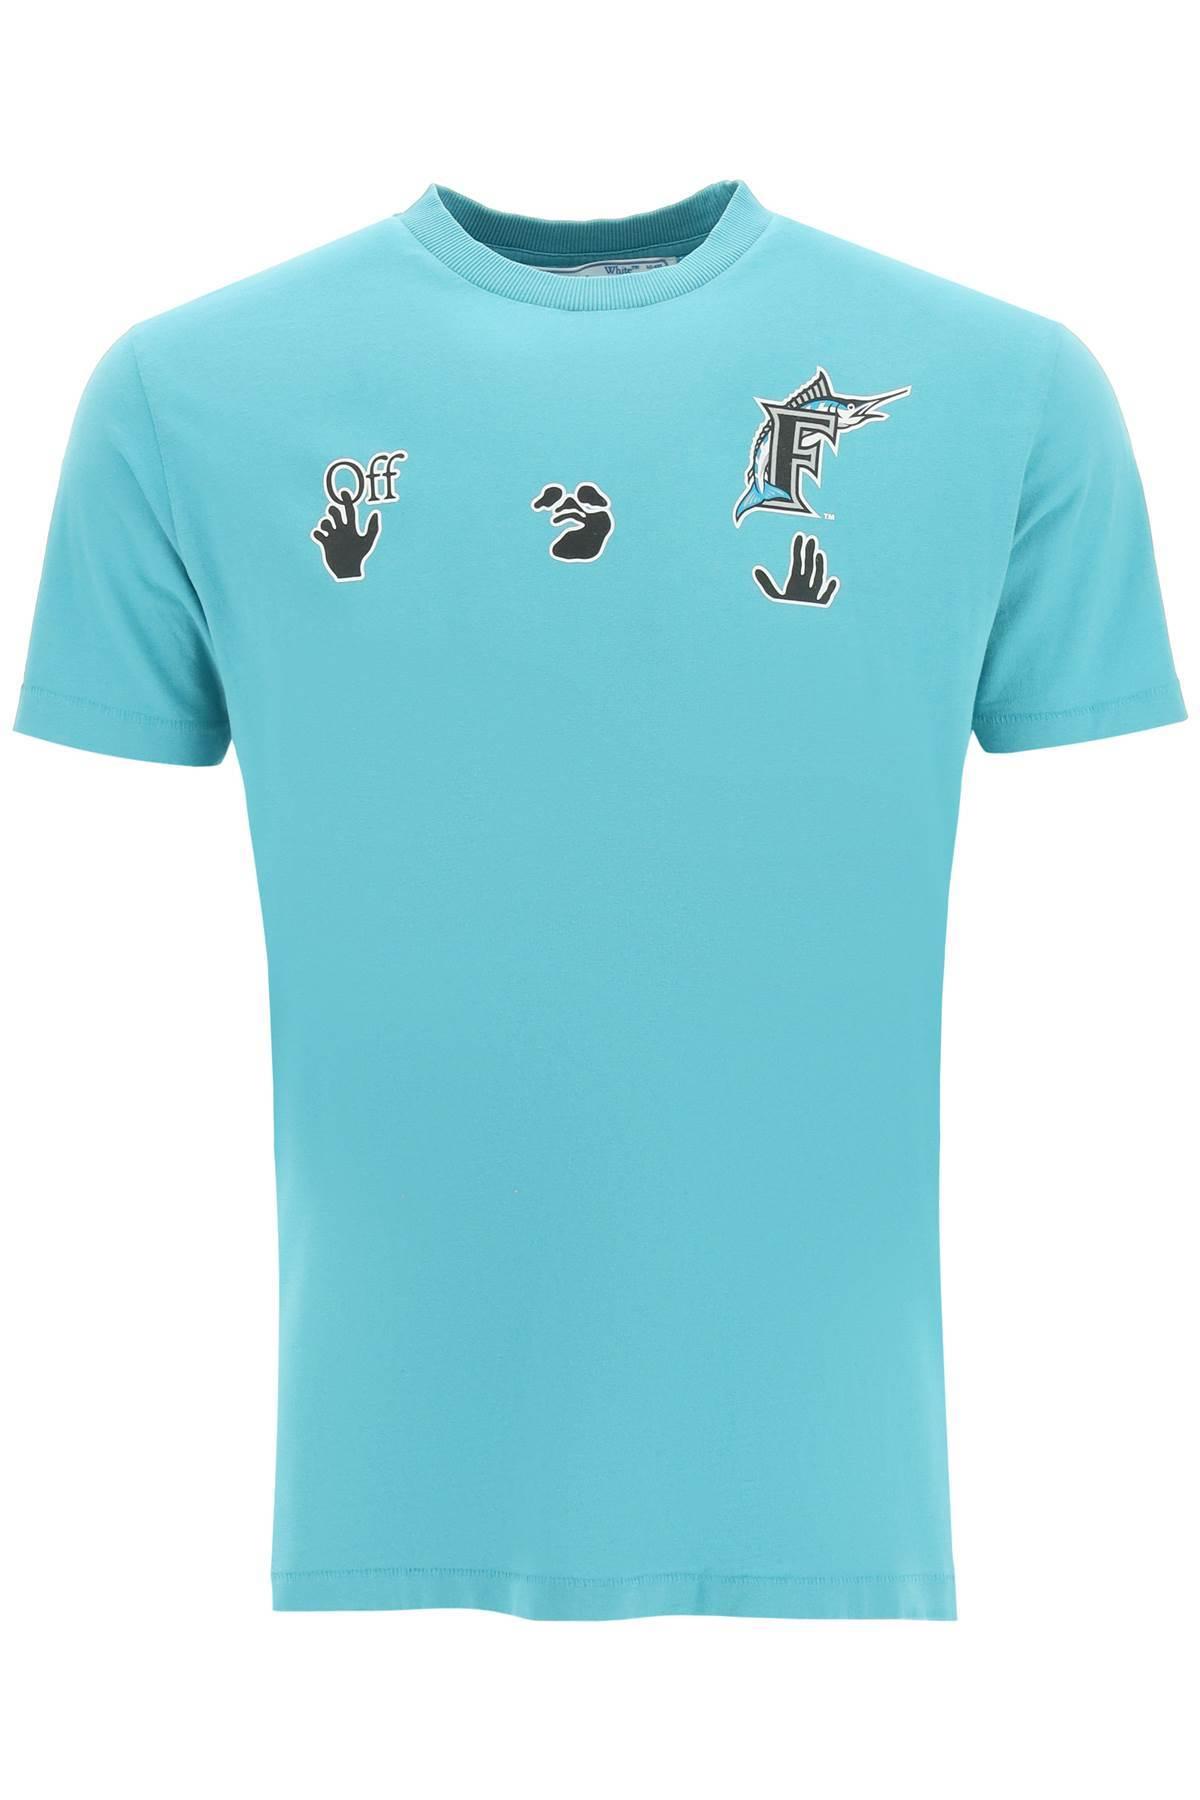 Off-White c/o Virgil Abloh Miami Marlins T-shirt X Mlb in Blue for Men 